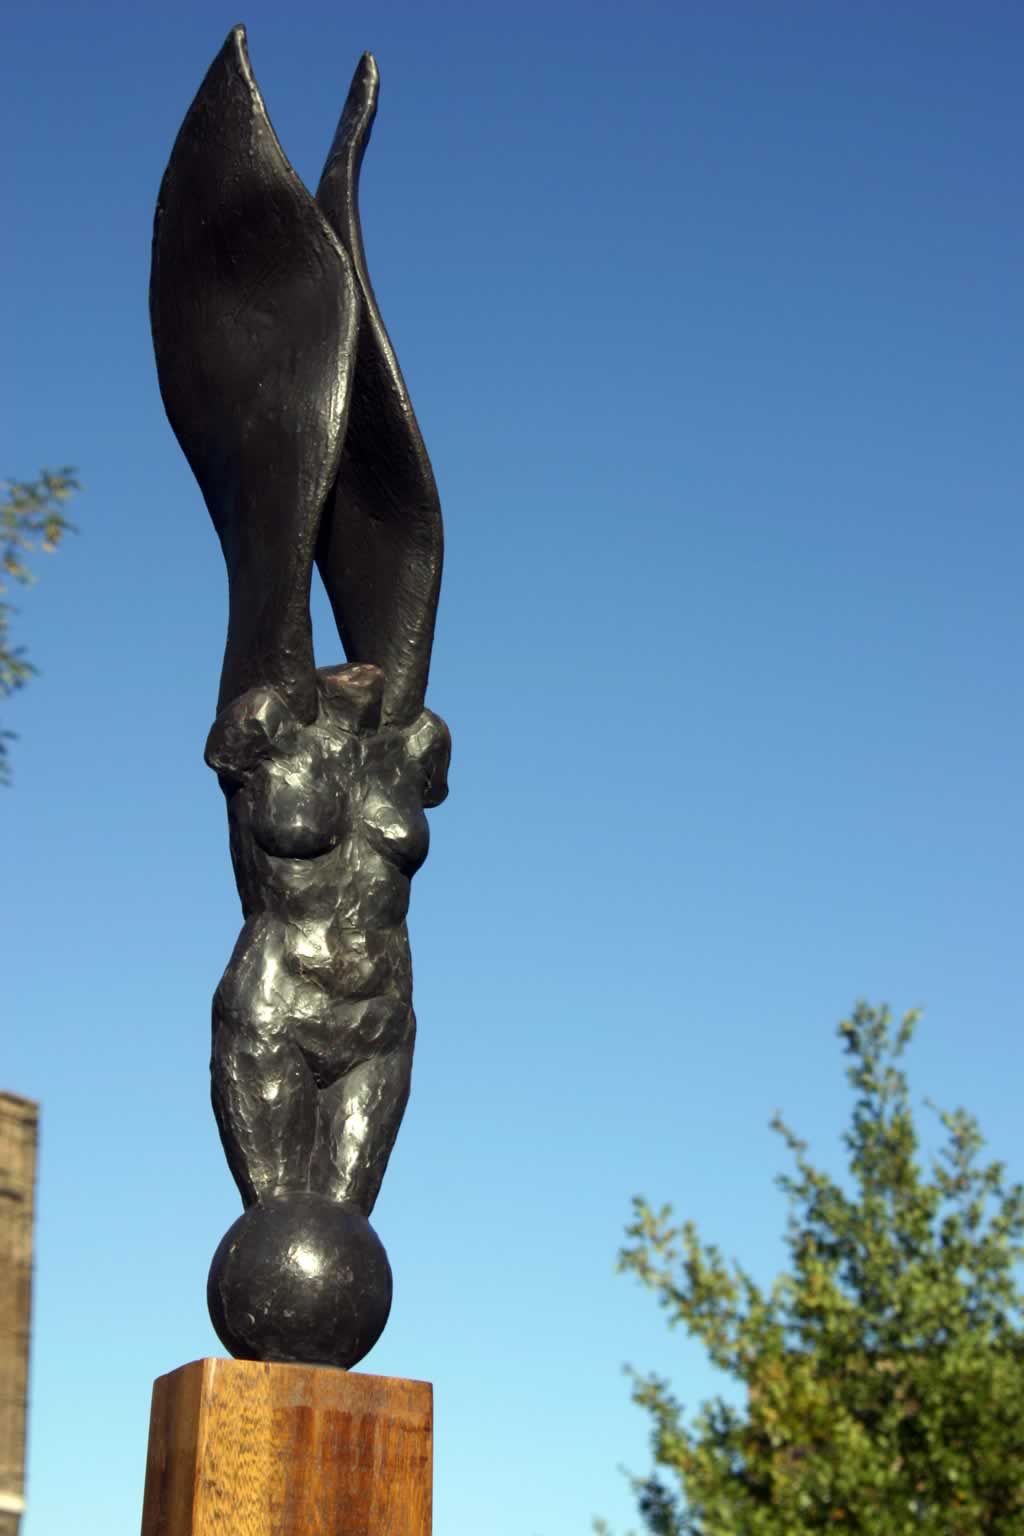 Fallen III (abstract figurative sculpture) by sculptor Ian Campbell-Briggs